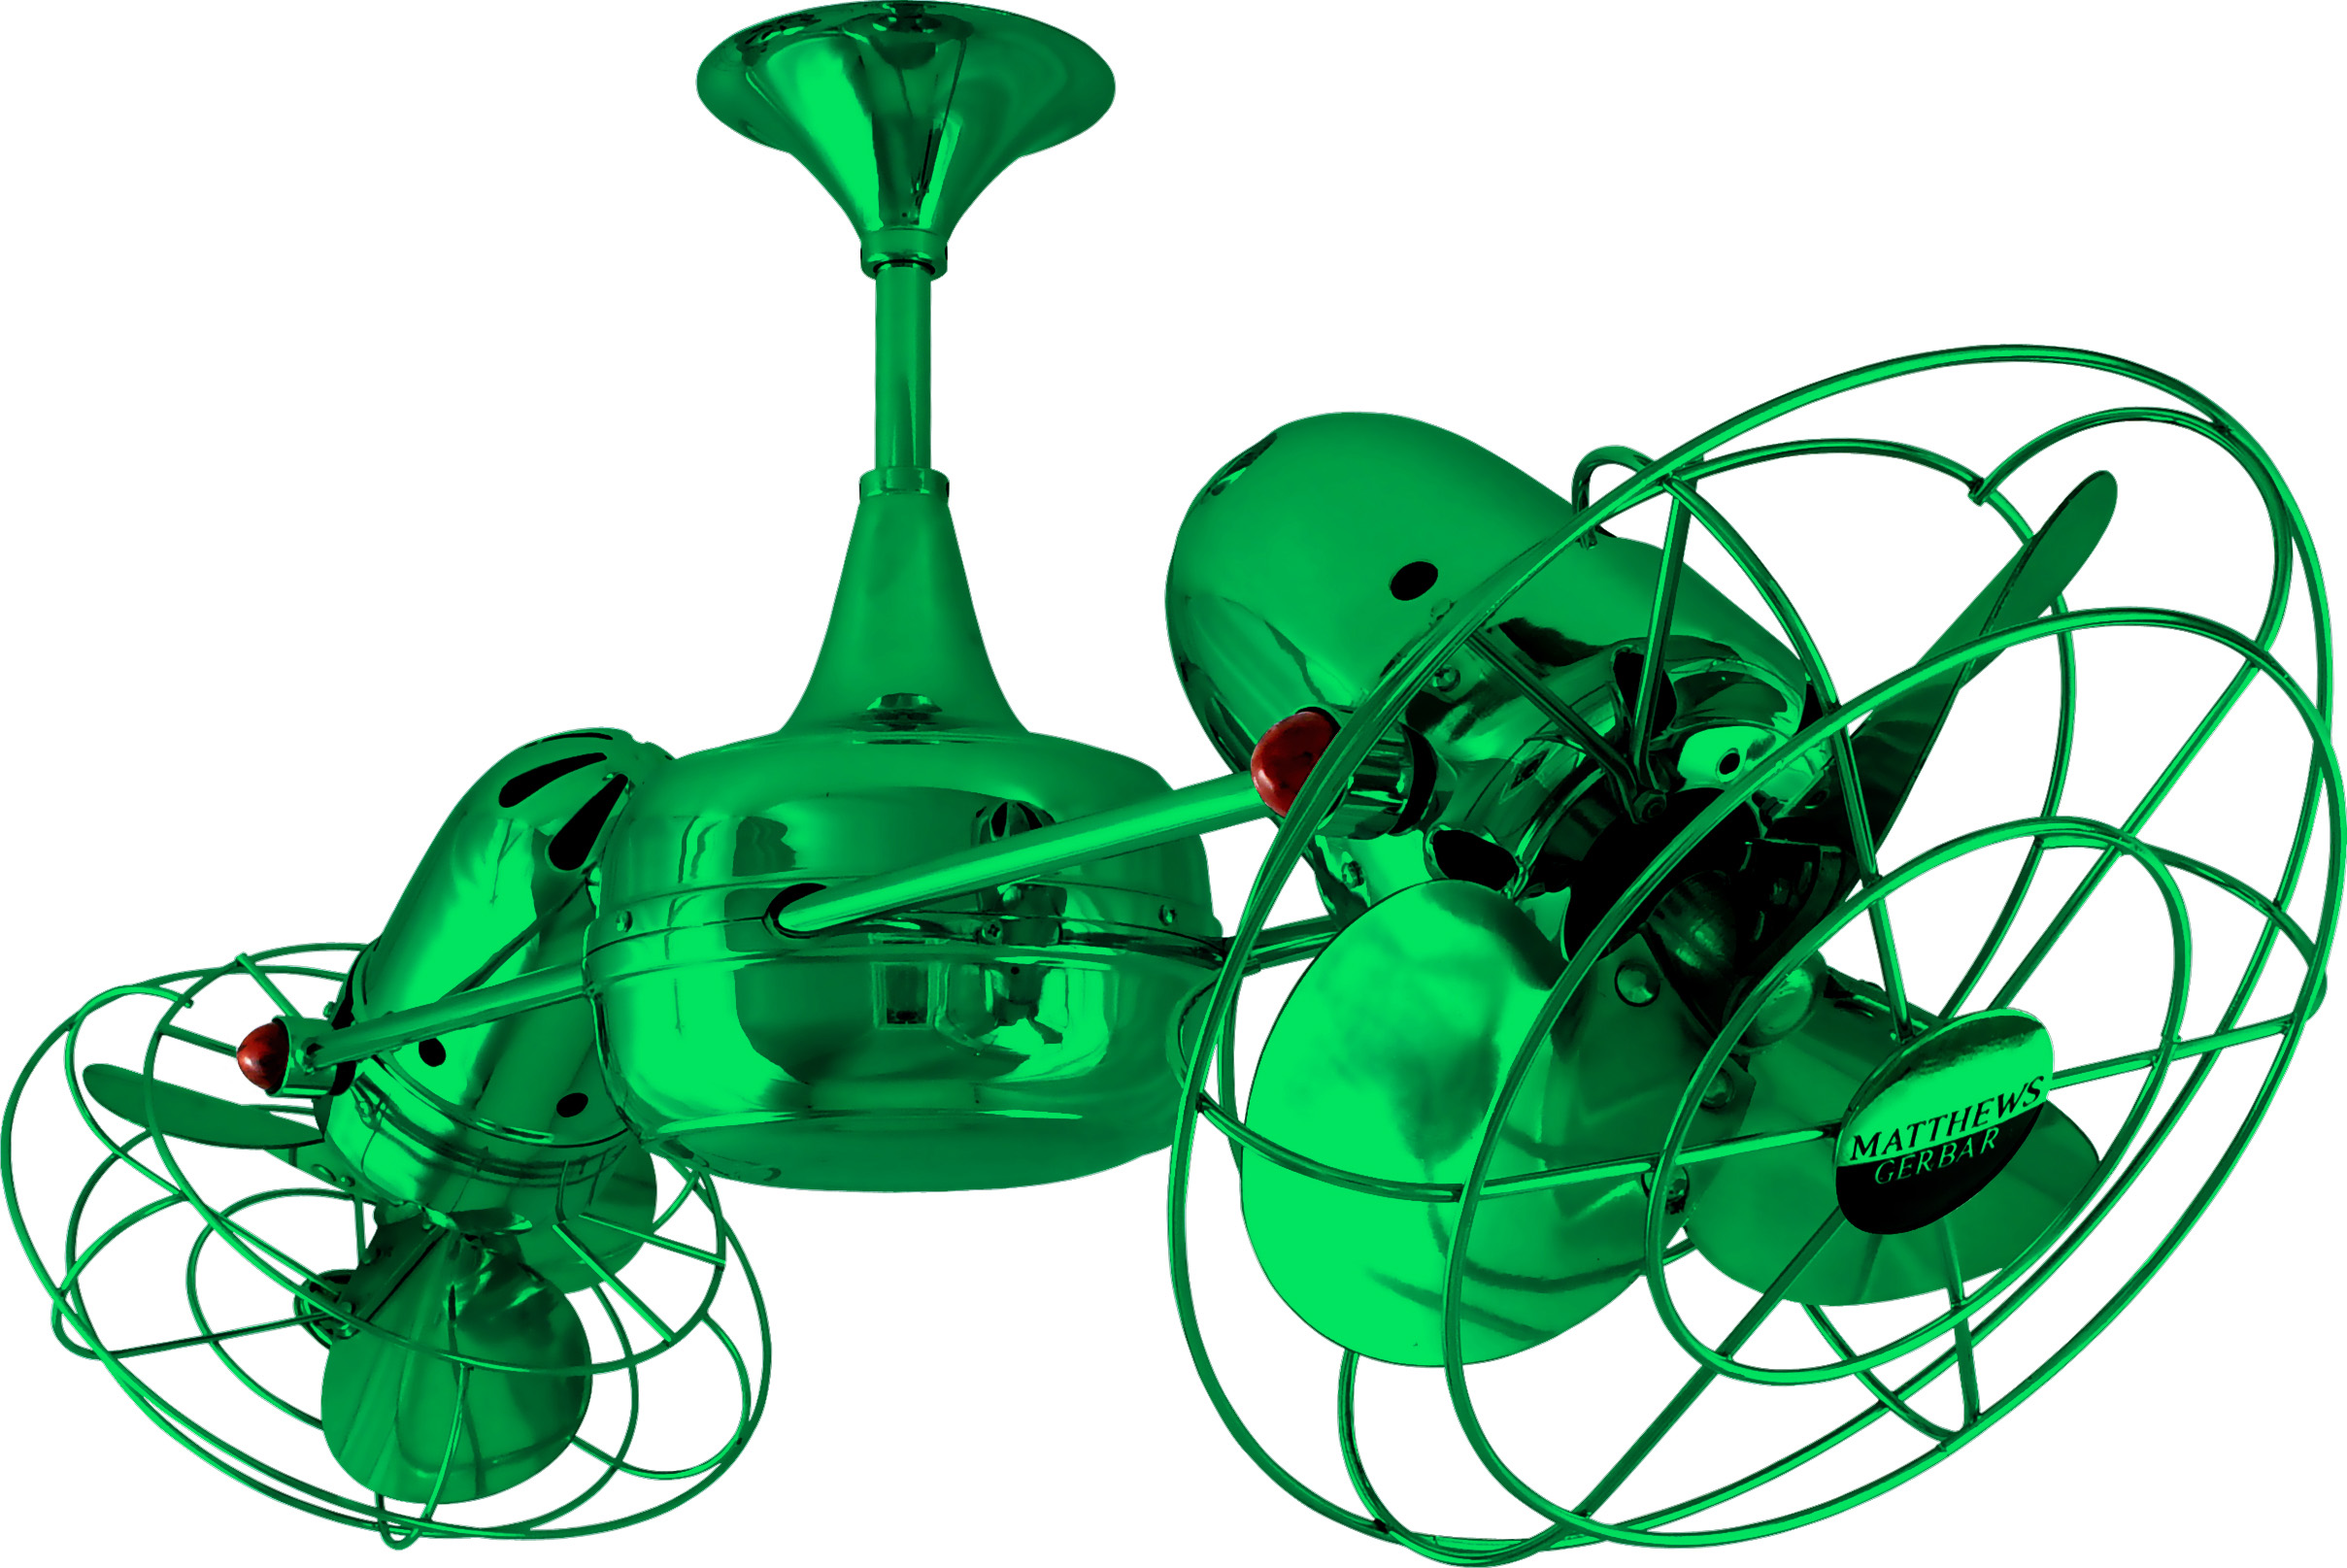 Duplo Dinamico Rotational Dual Head Ceiling Fan in Esmeralda / Green Finish with Metal Blades